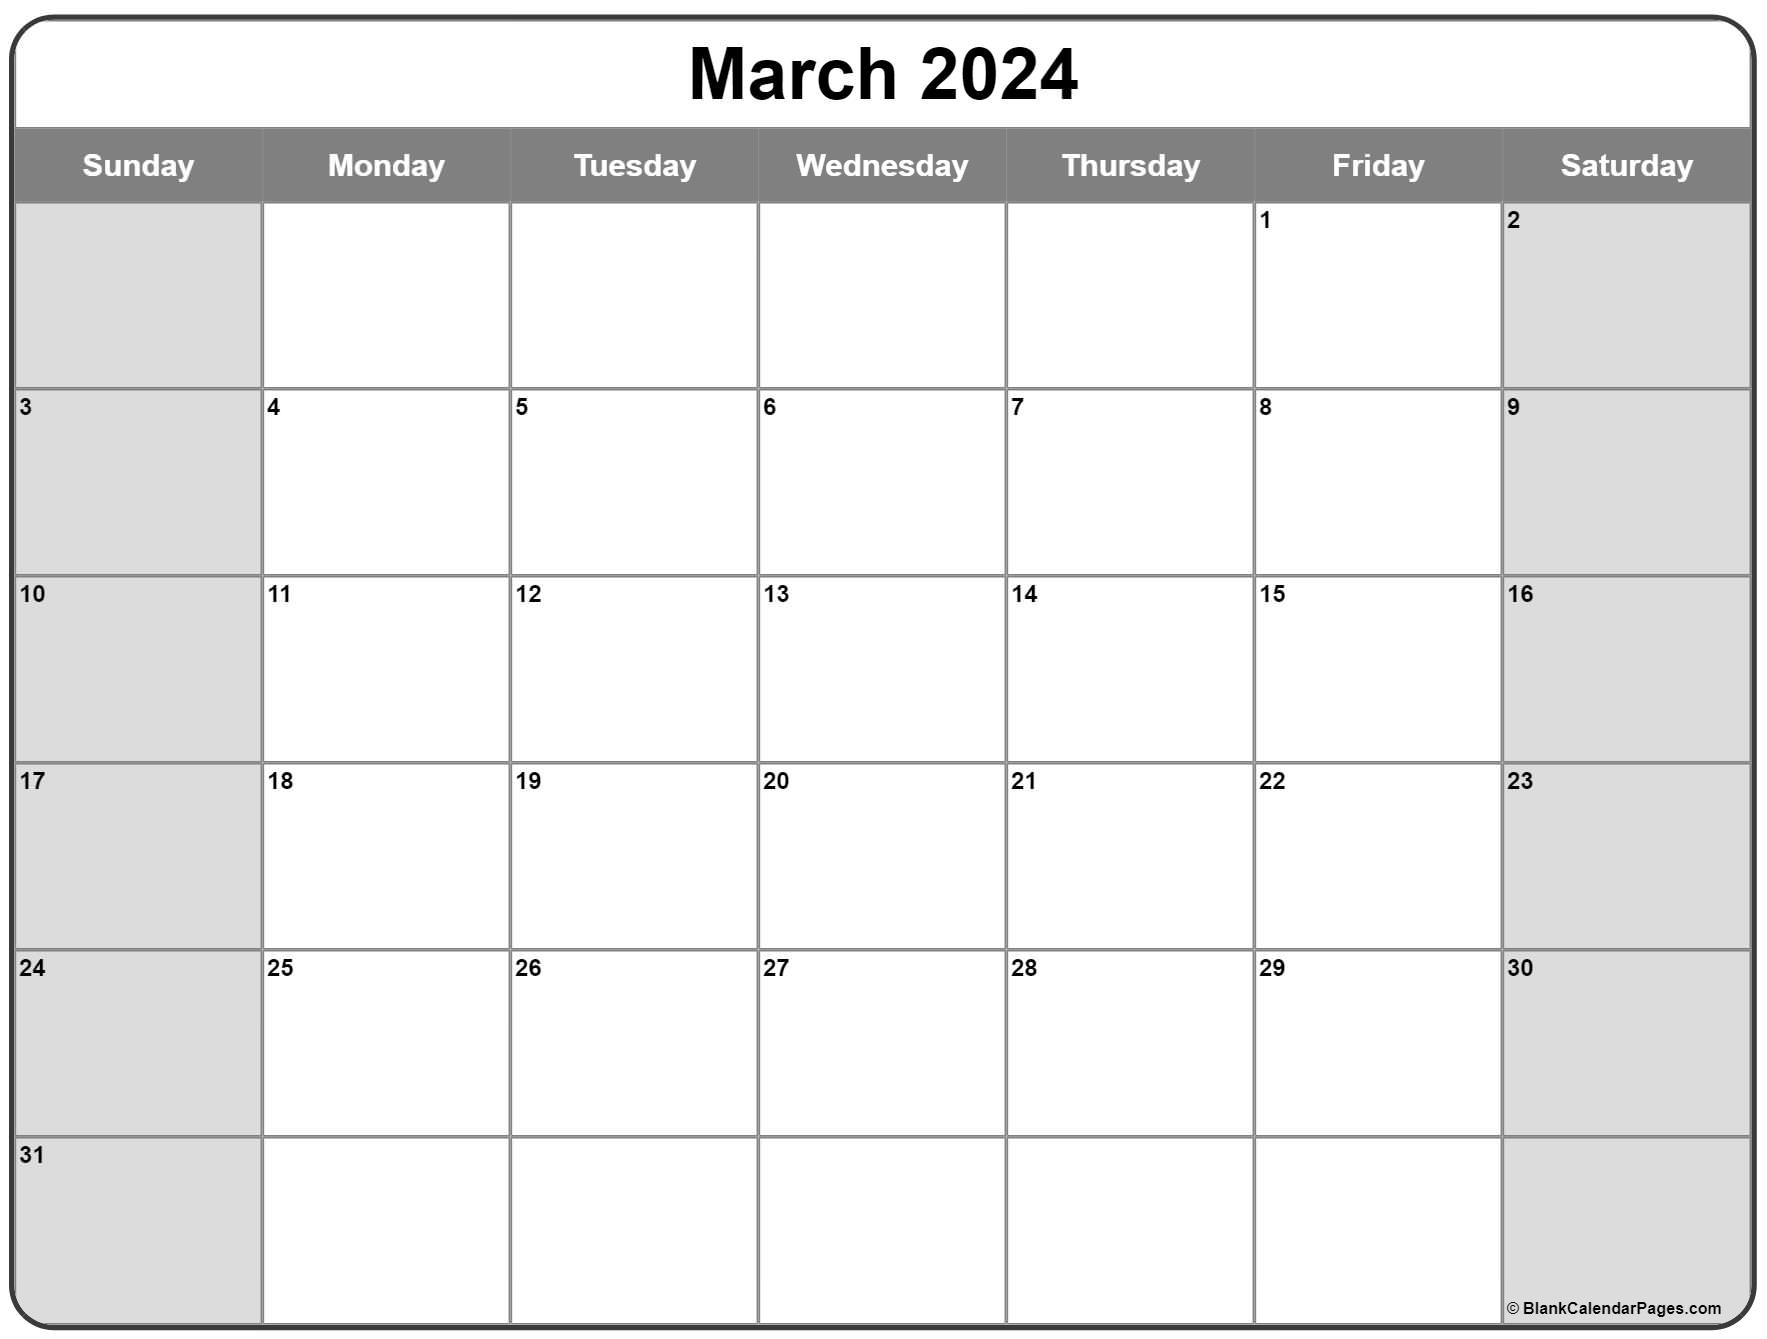 March 2023 calendar free printable calendar